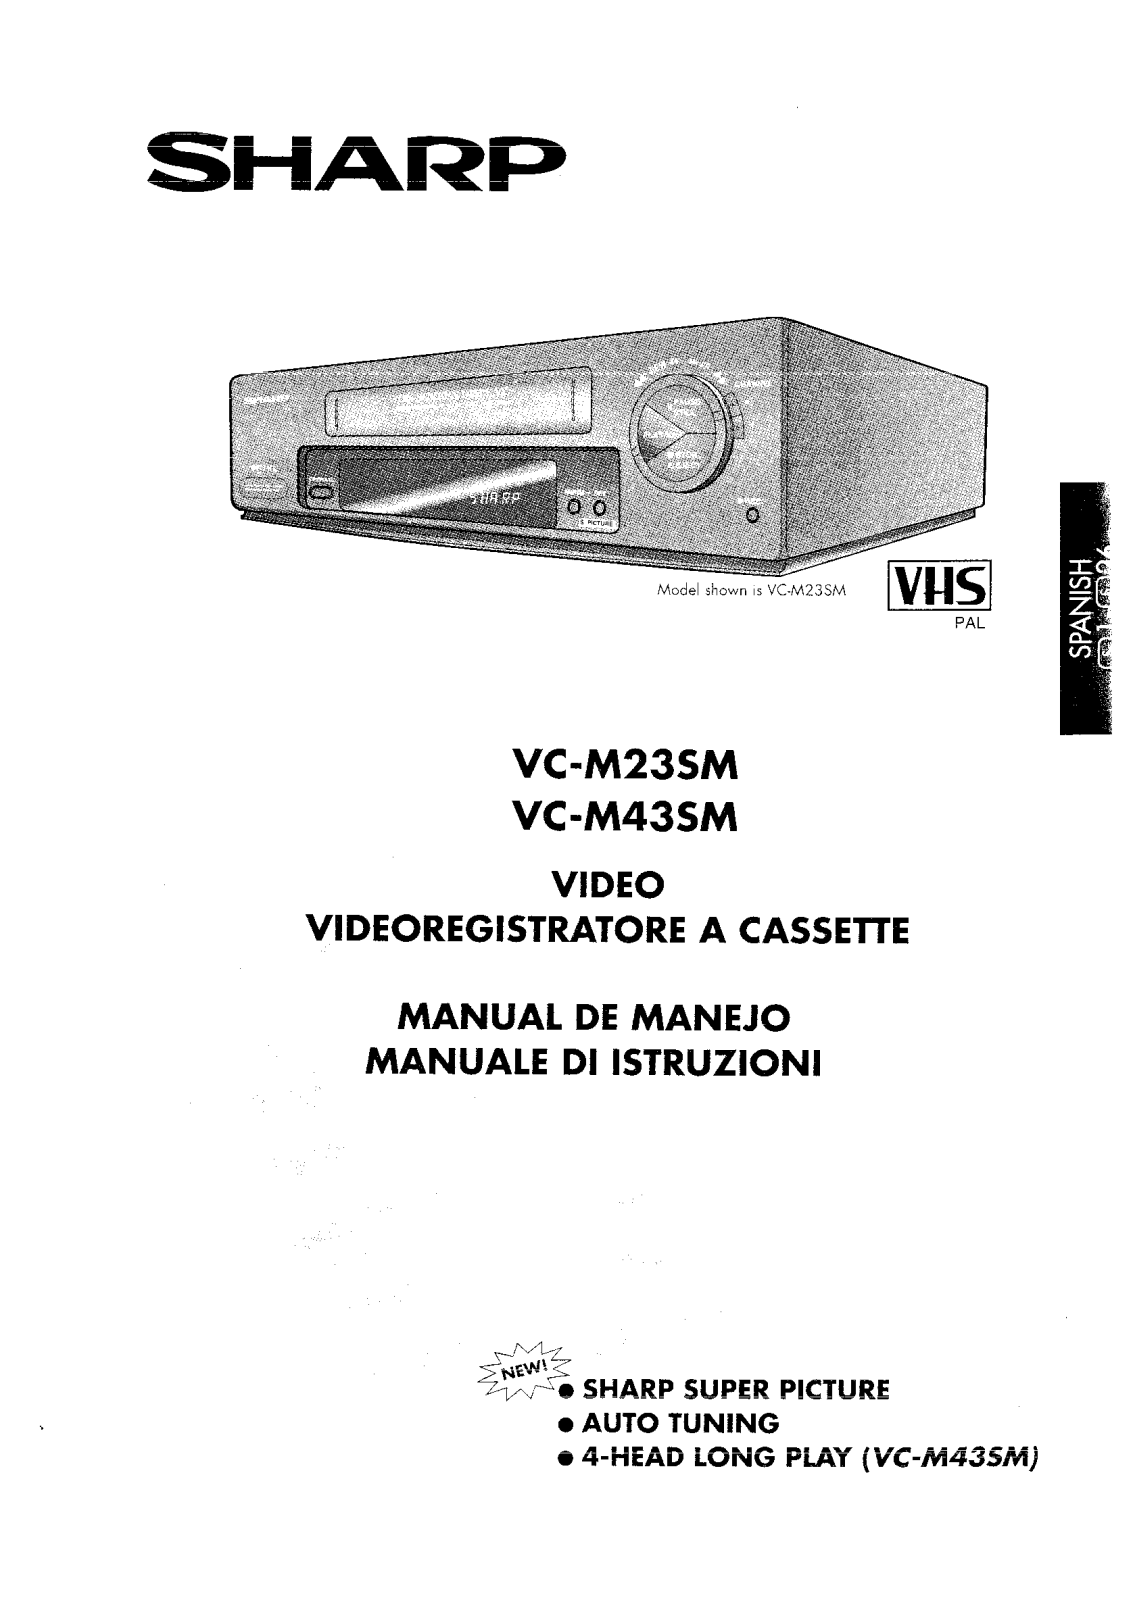 Sharp VC-M23SM, VC-M43SM Manual